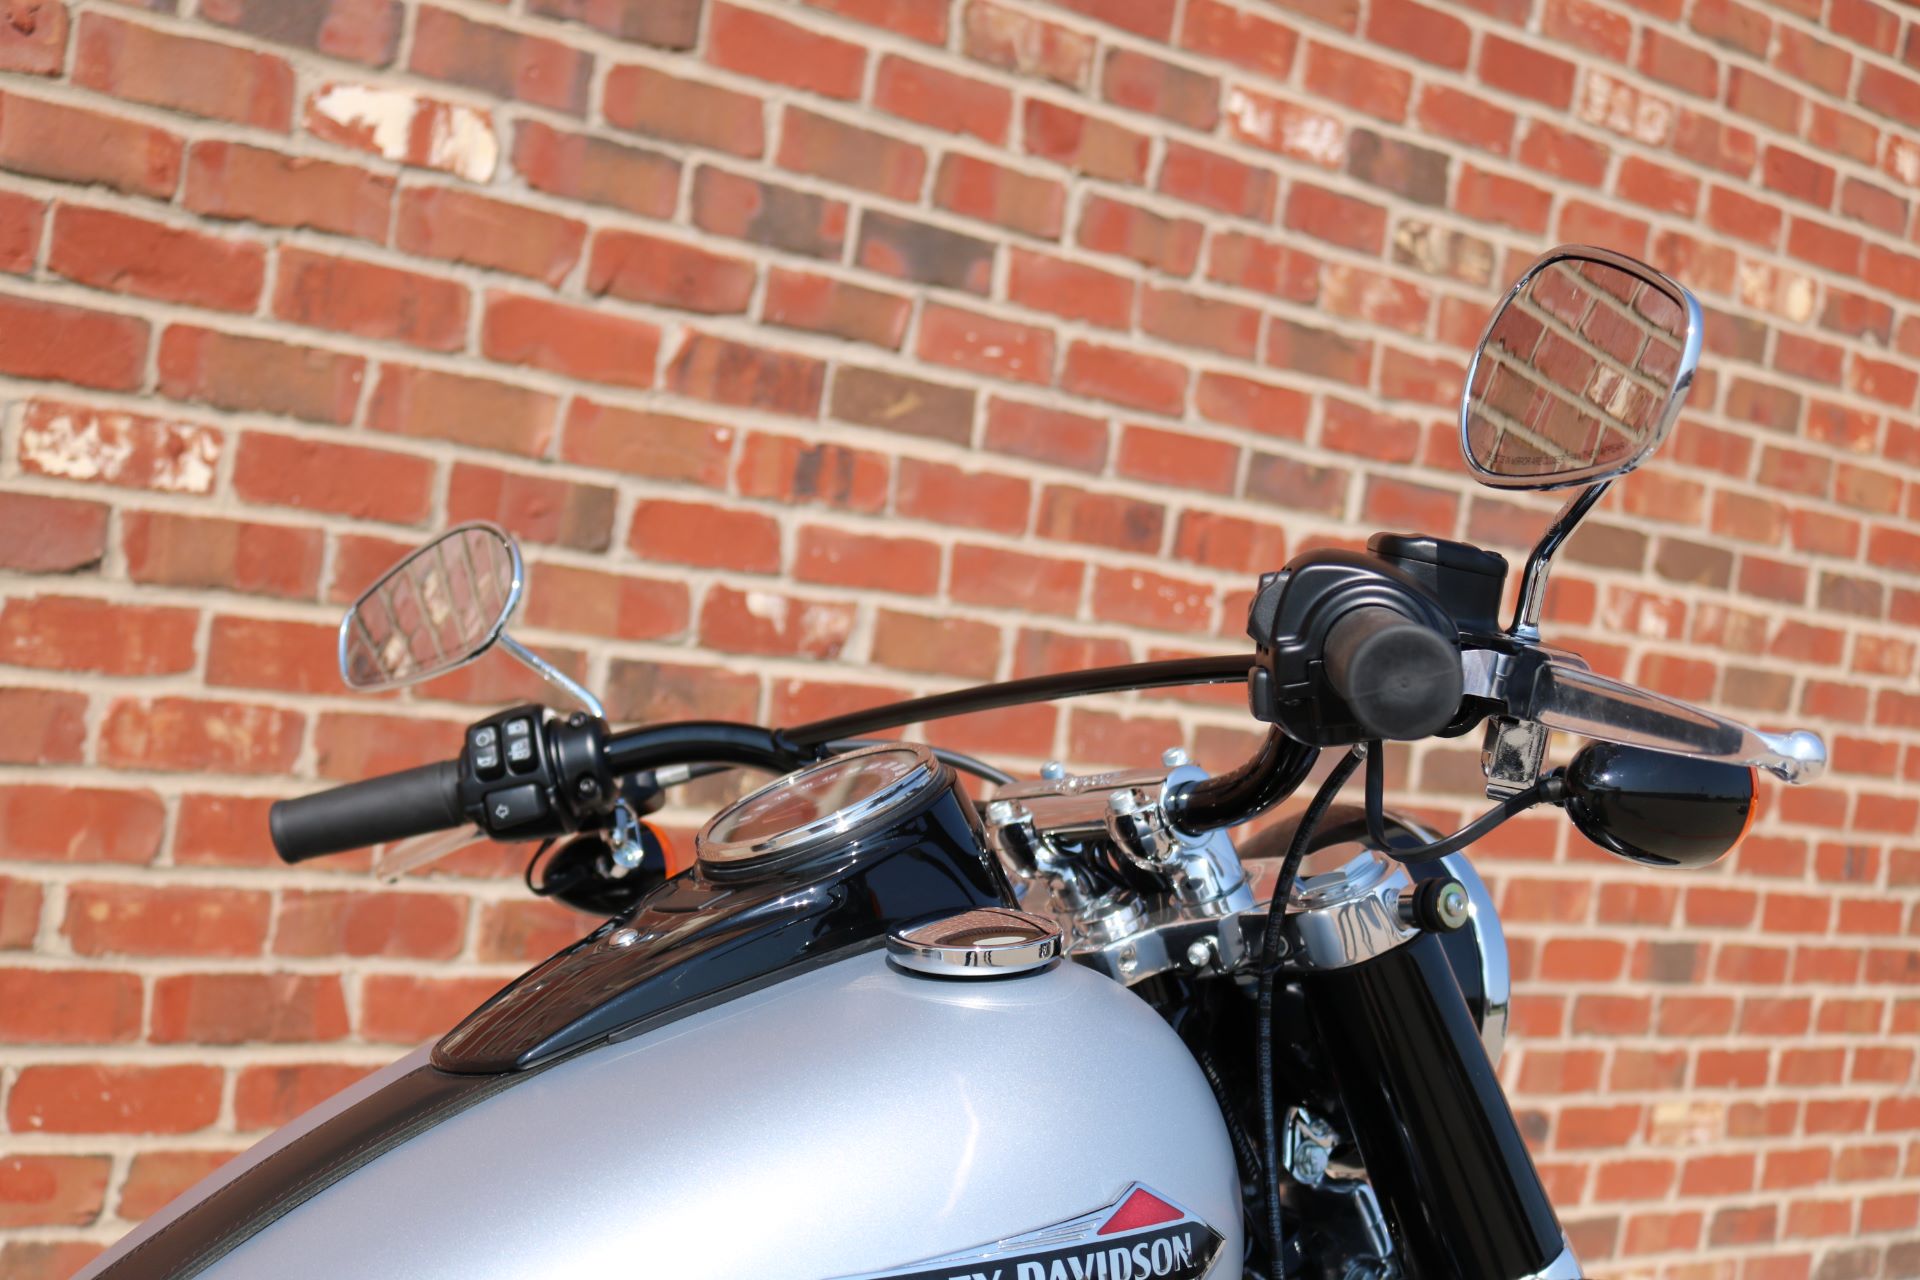 2020 Harley-Davidson Softail Slim® in Ames, Iowa - Photo 5